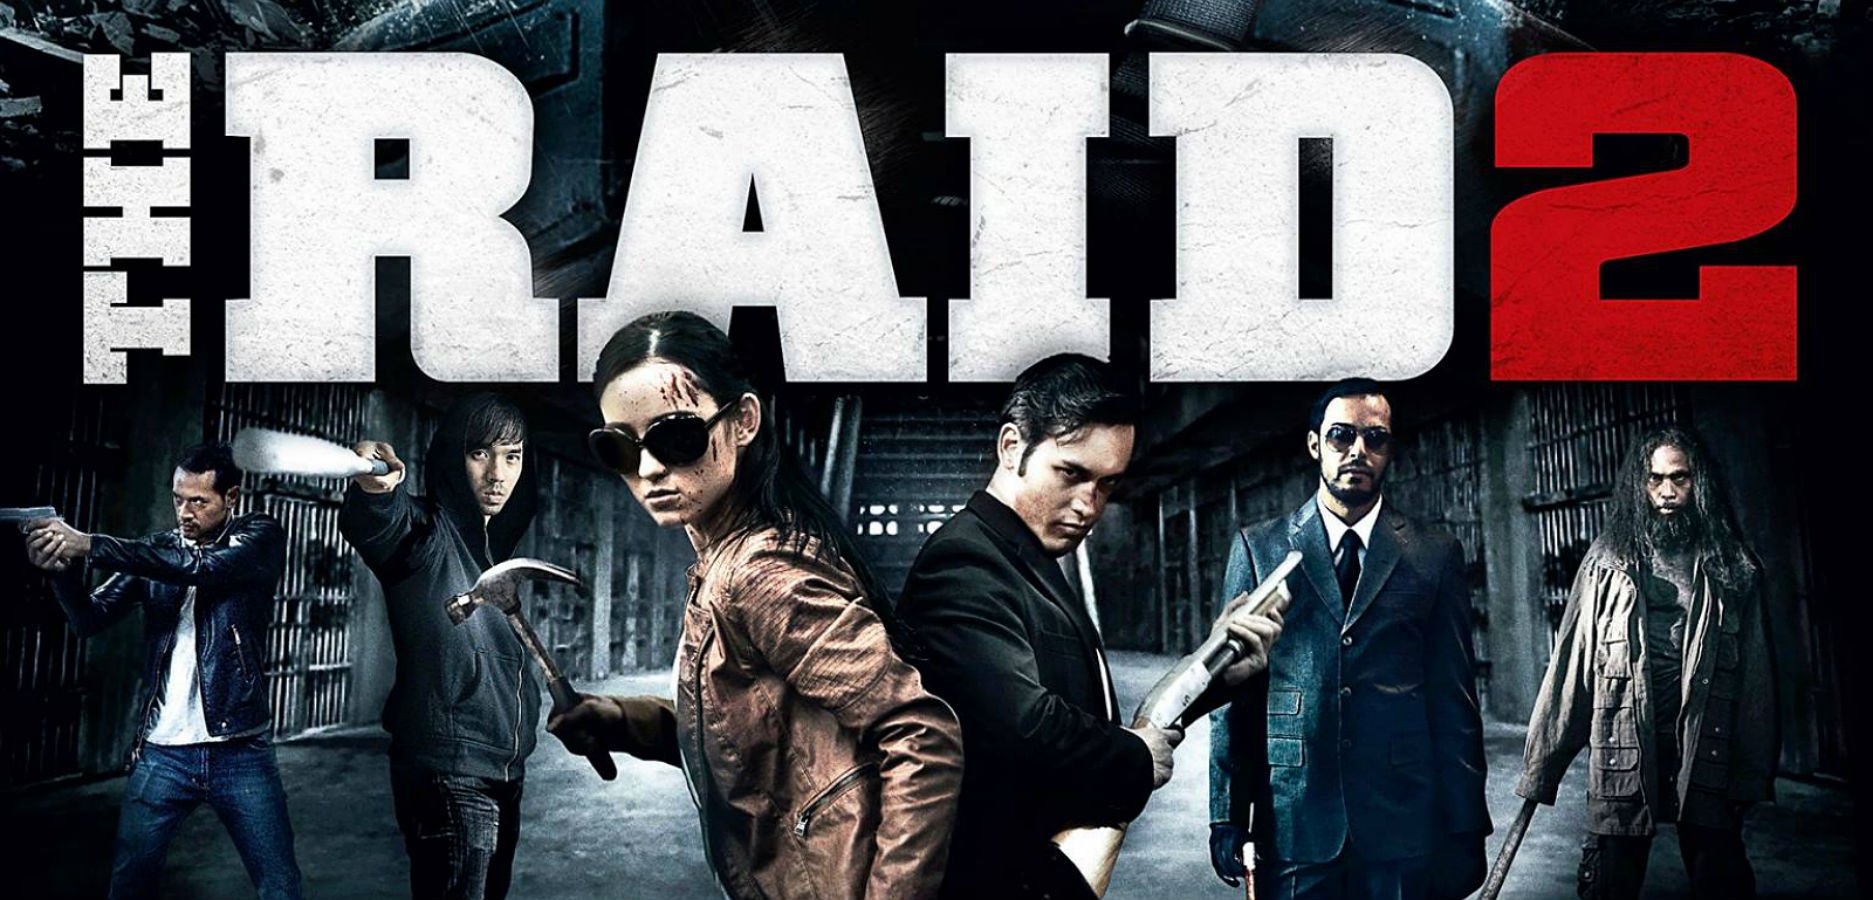 the raid 2 full movie download